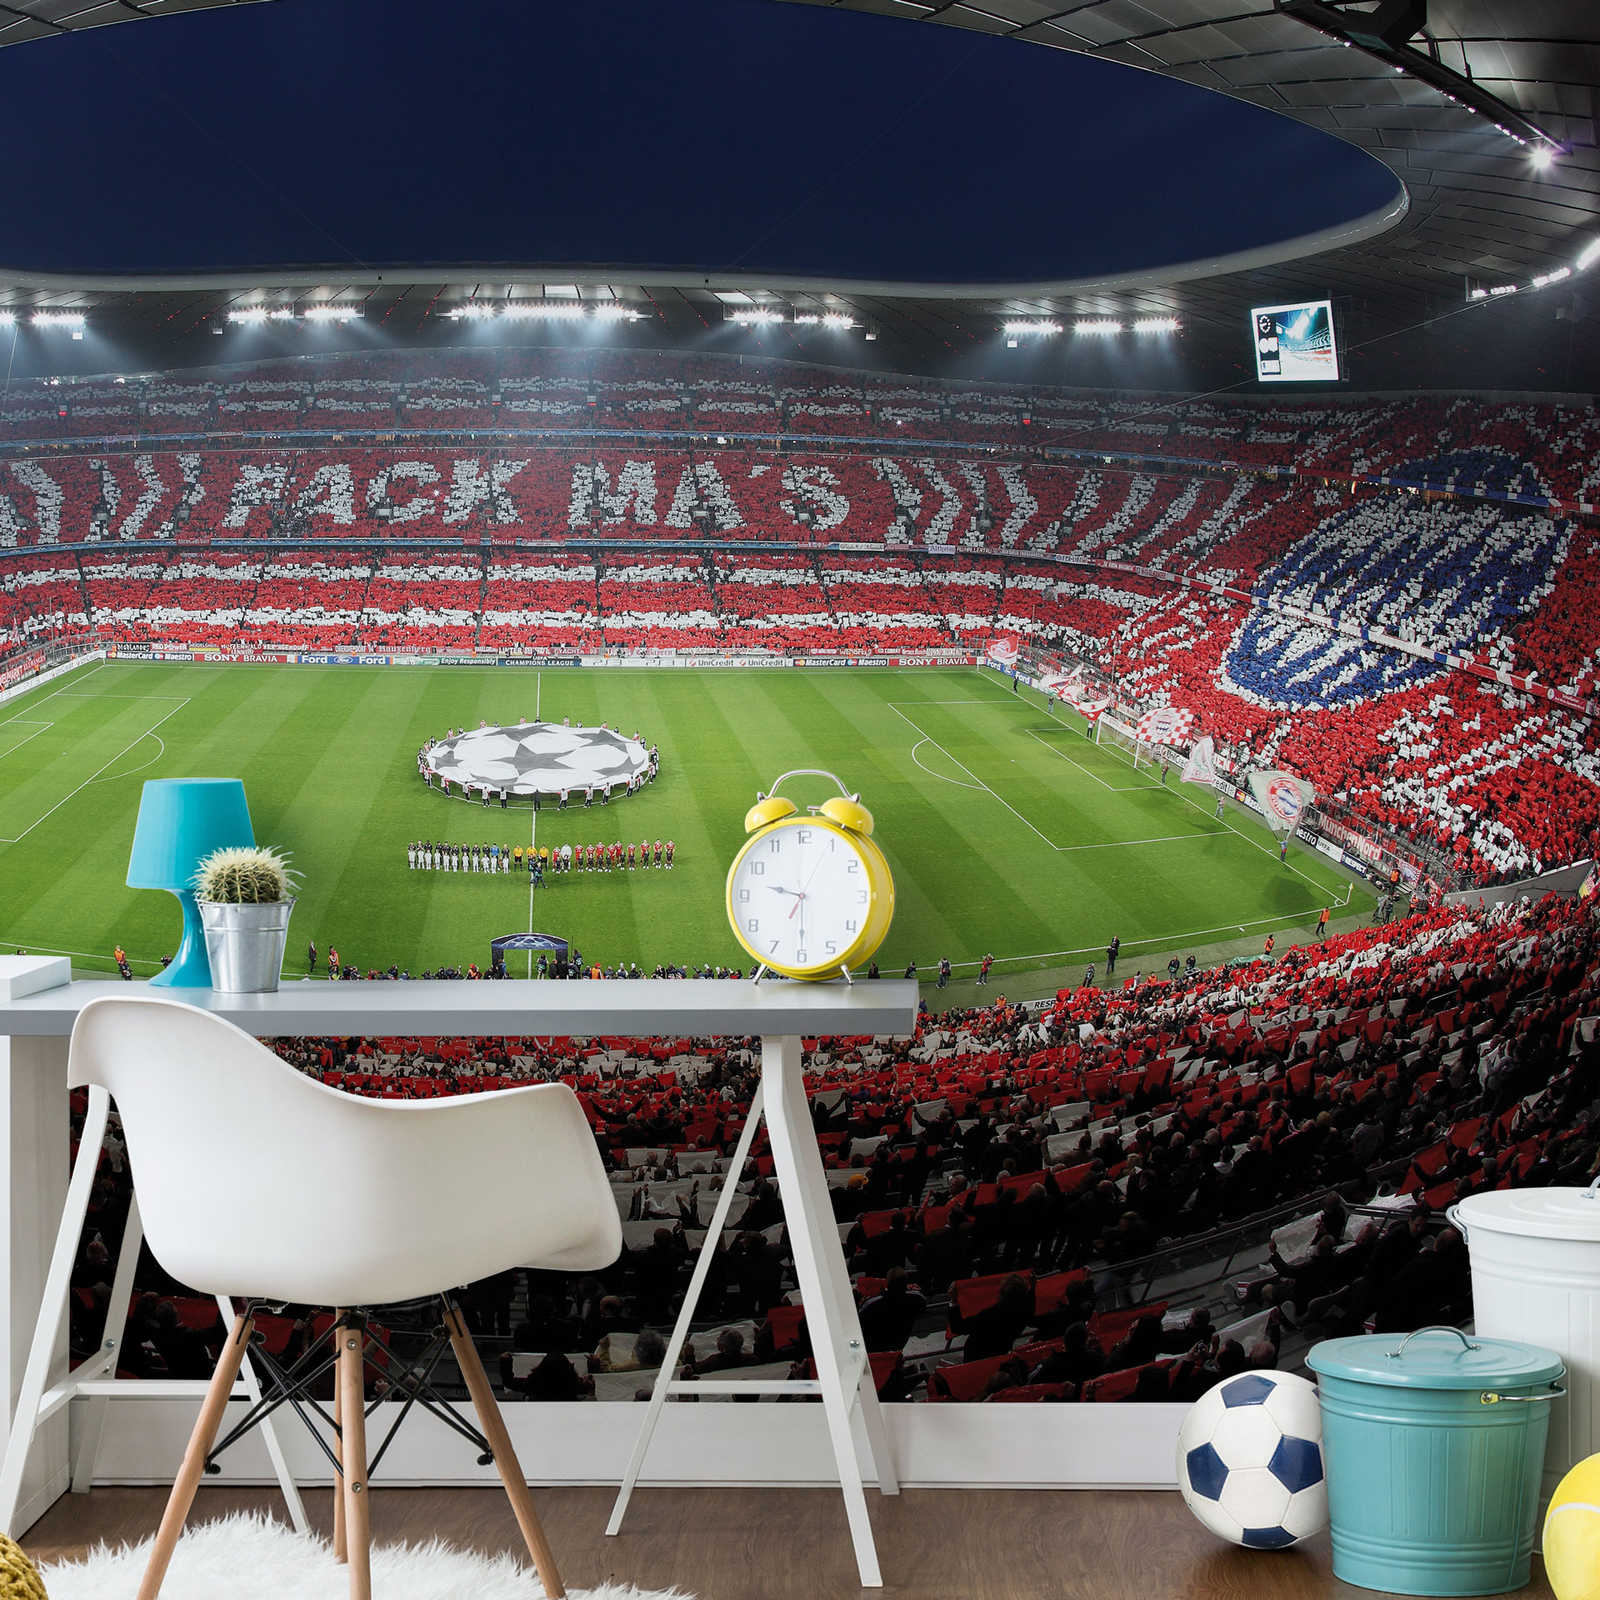             FC Bayern stadium & fan choreography mural
        